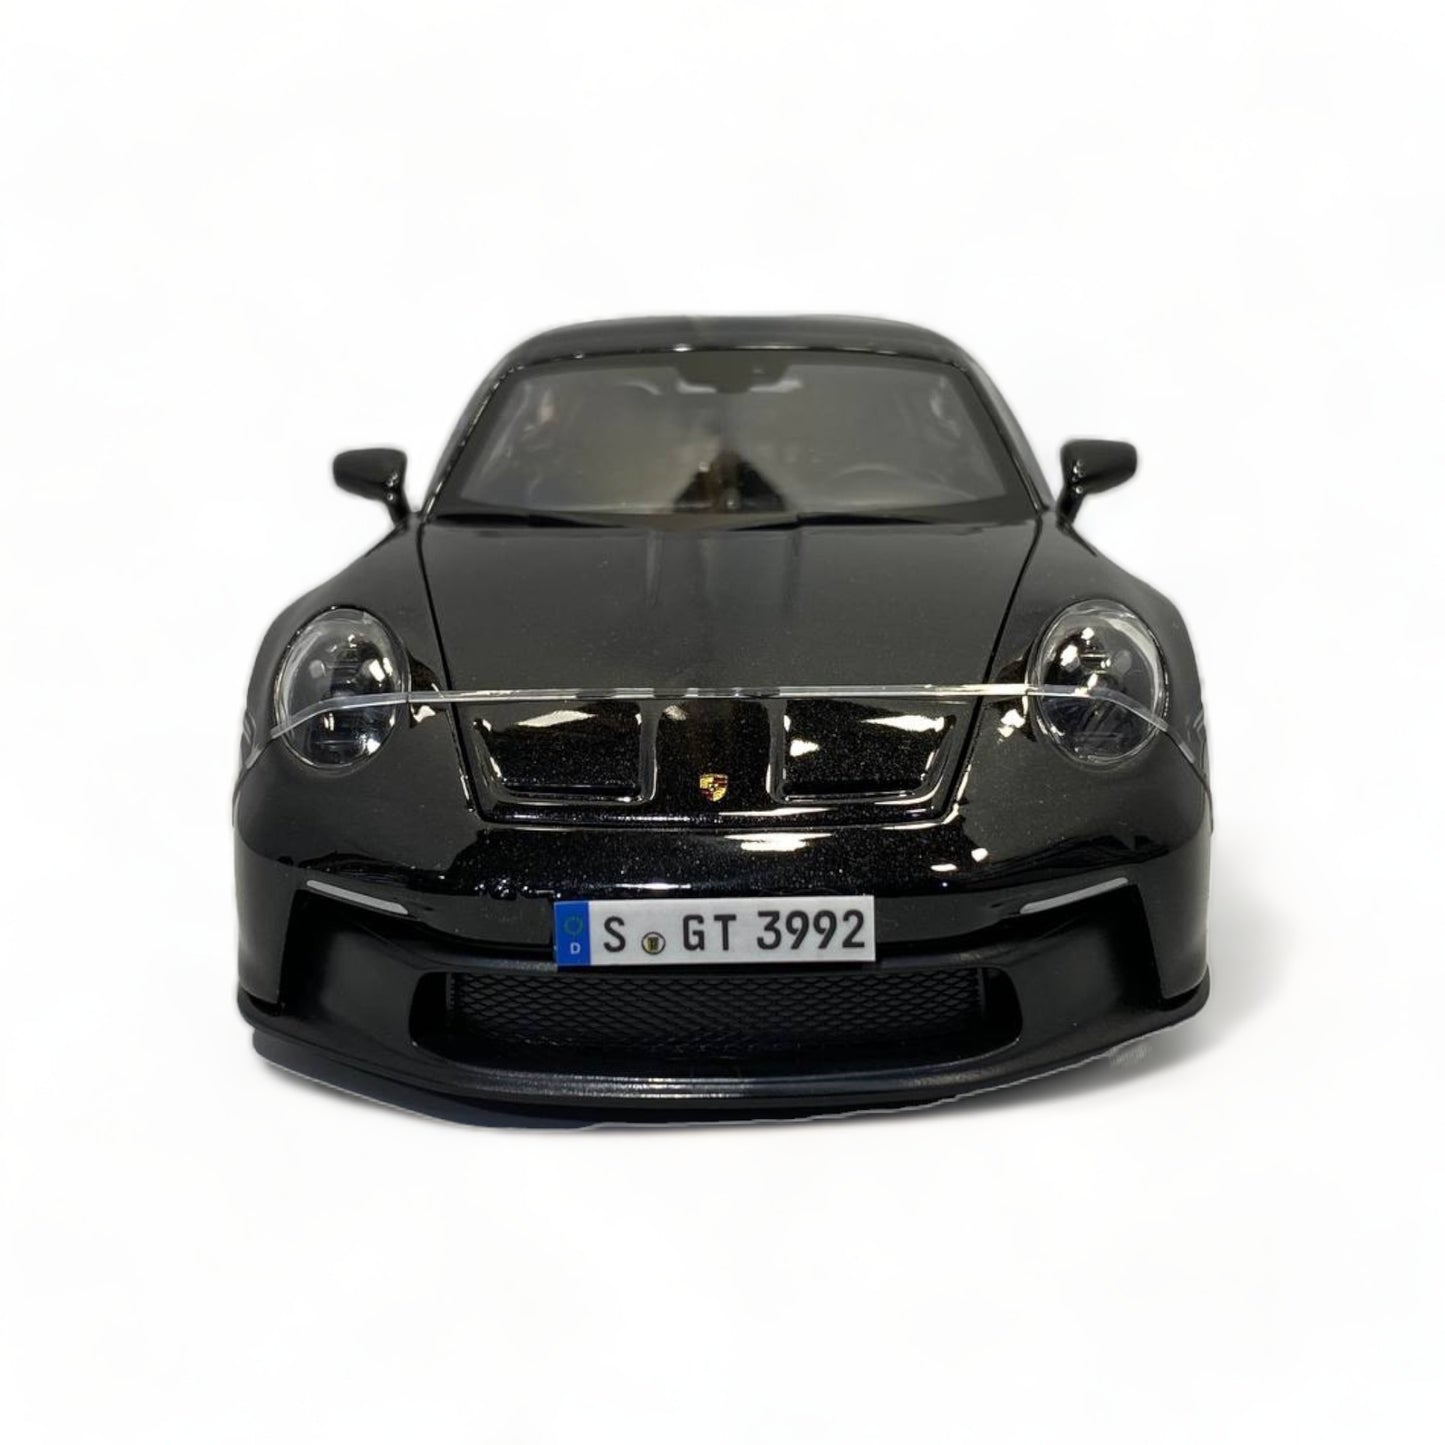 1/18 Porsche 911 GT3 Black Scale Model car by Maisto